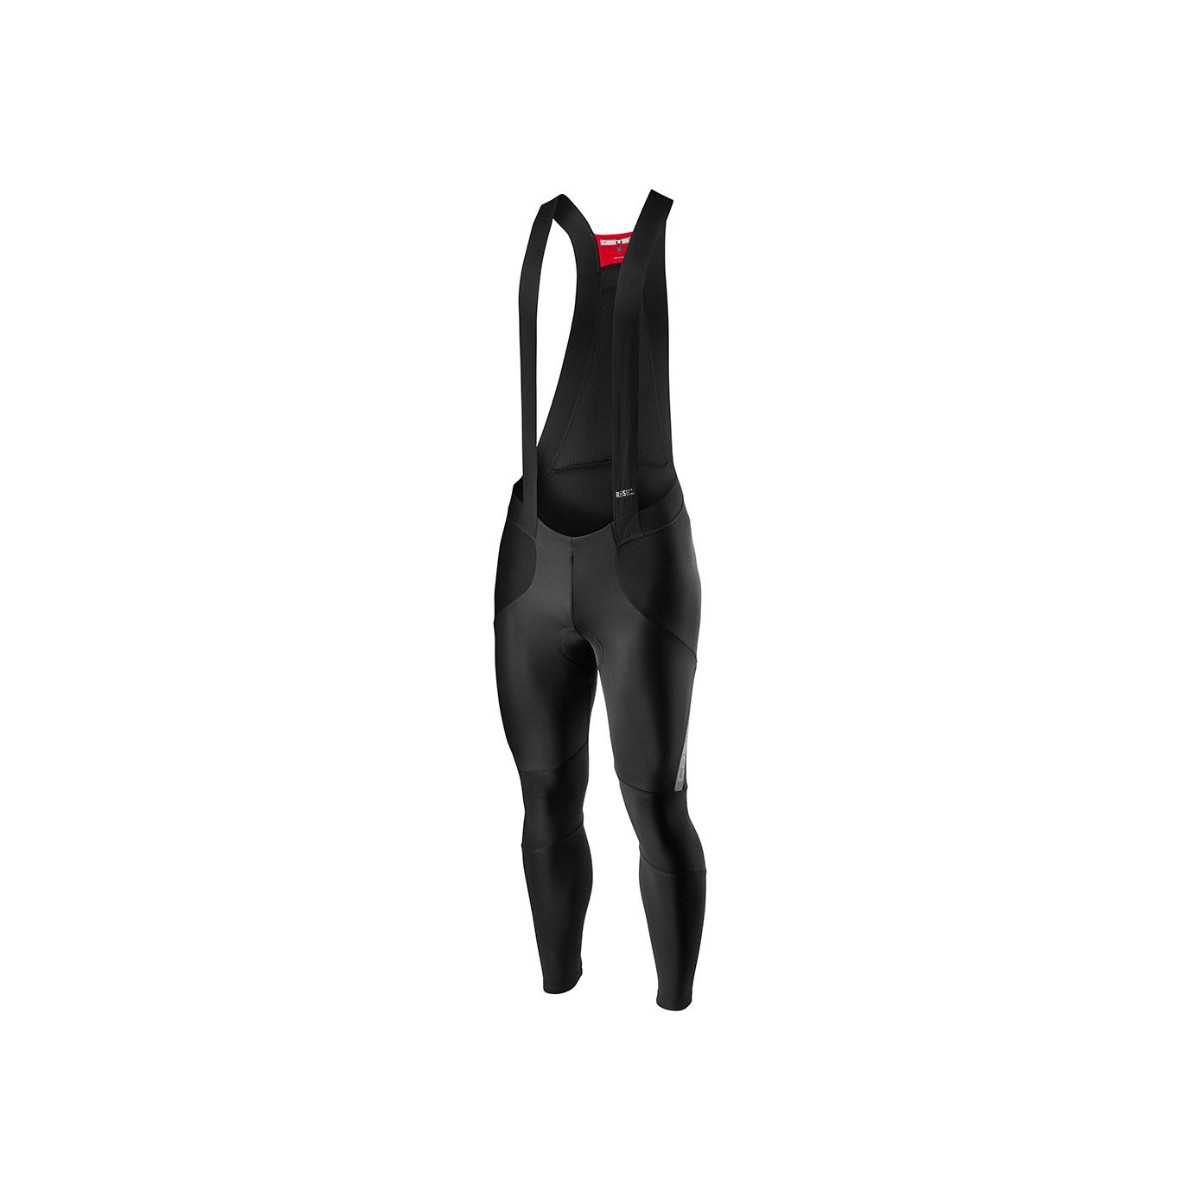 Castelli Sorpasso RoS Long Reflective Black Bib Shorts, Size S